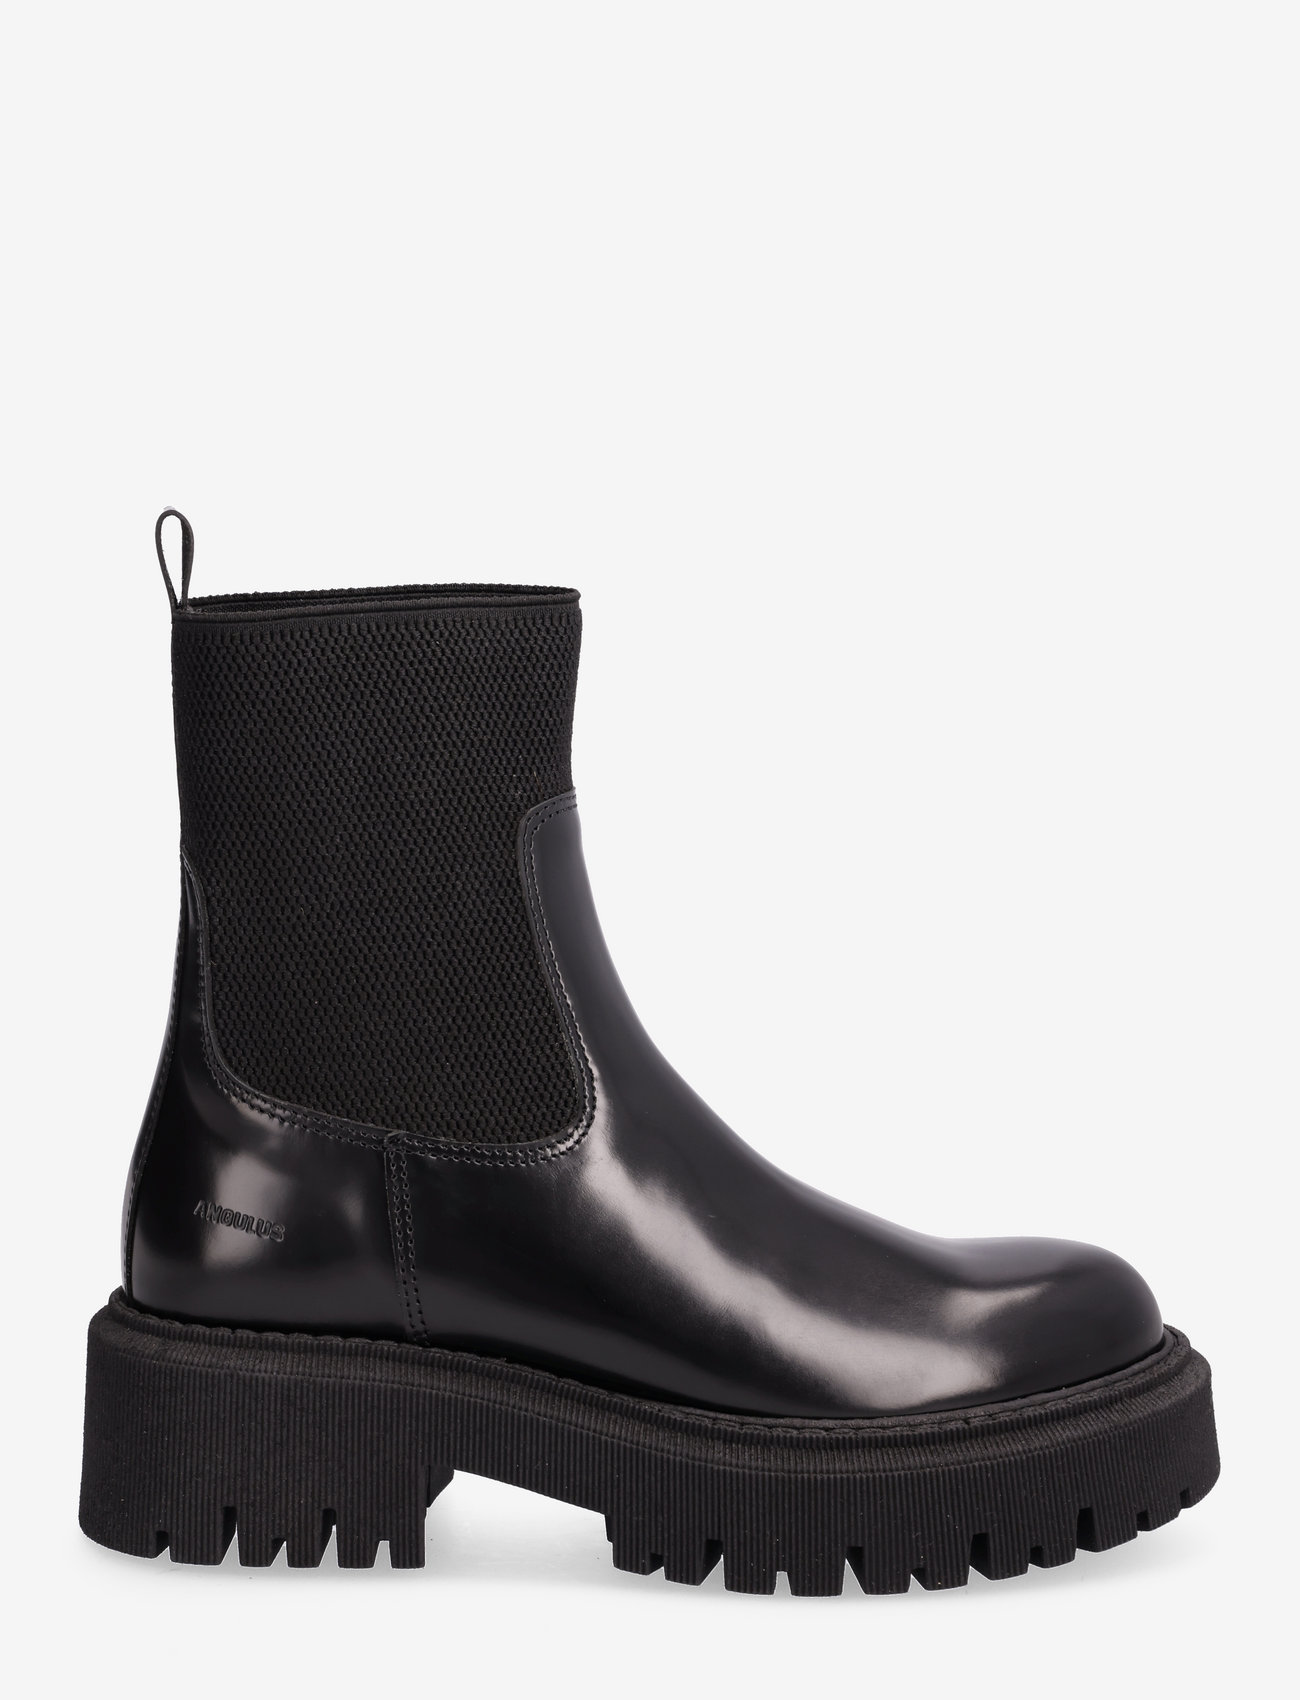 ANGULUS - Boots - flat - platta ankelboots - 1425/053 black/black - 1